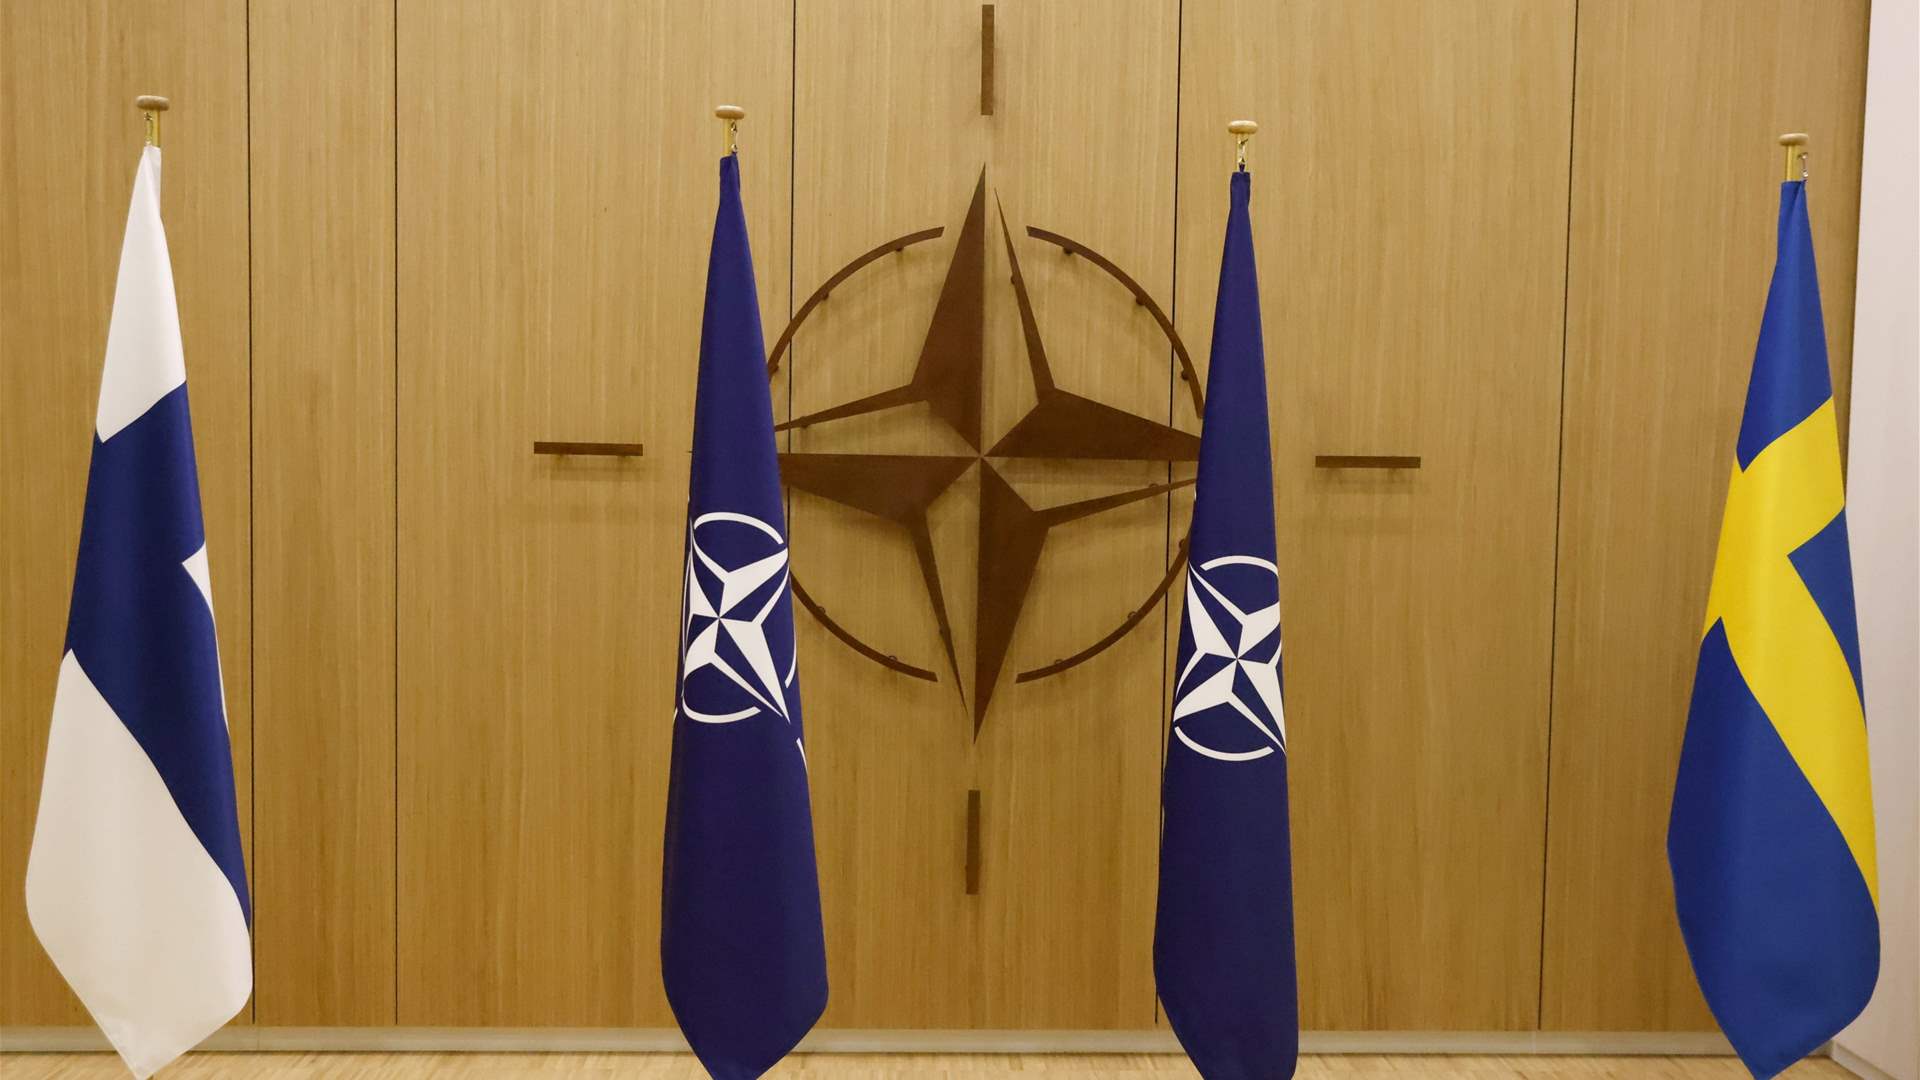 Turkey favors approving Finland’s NATO bid before Sweden’s